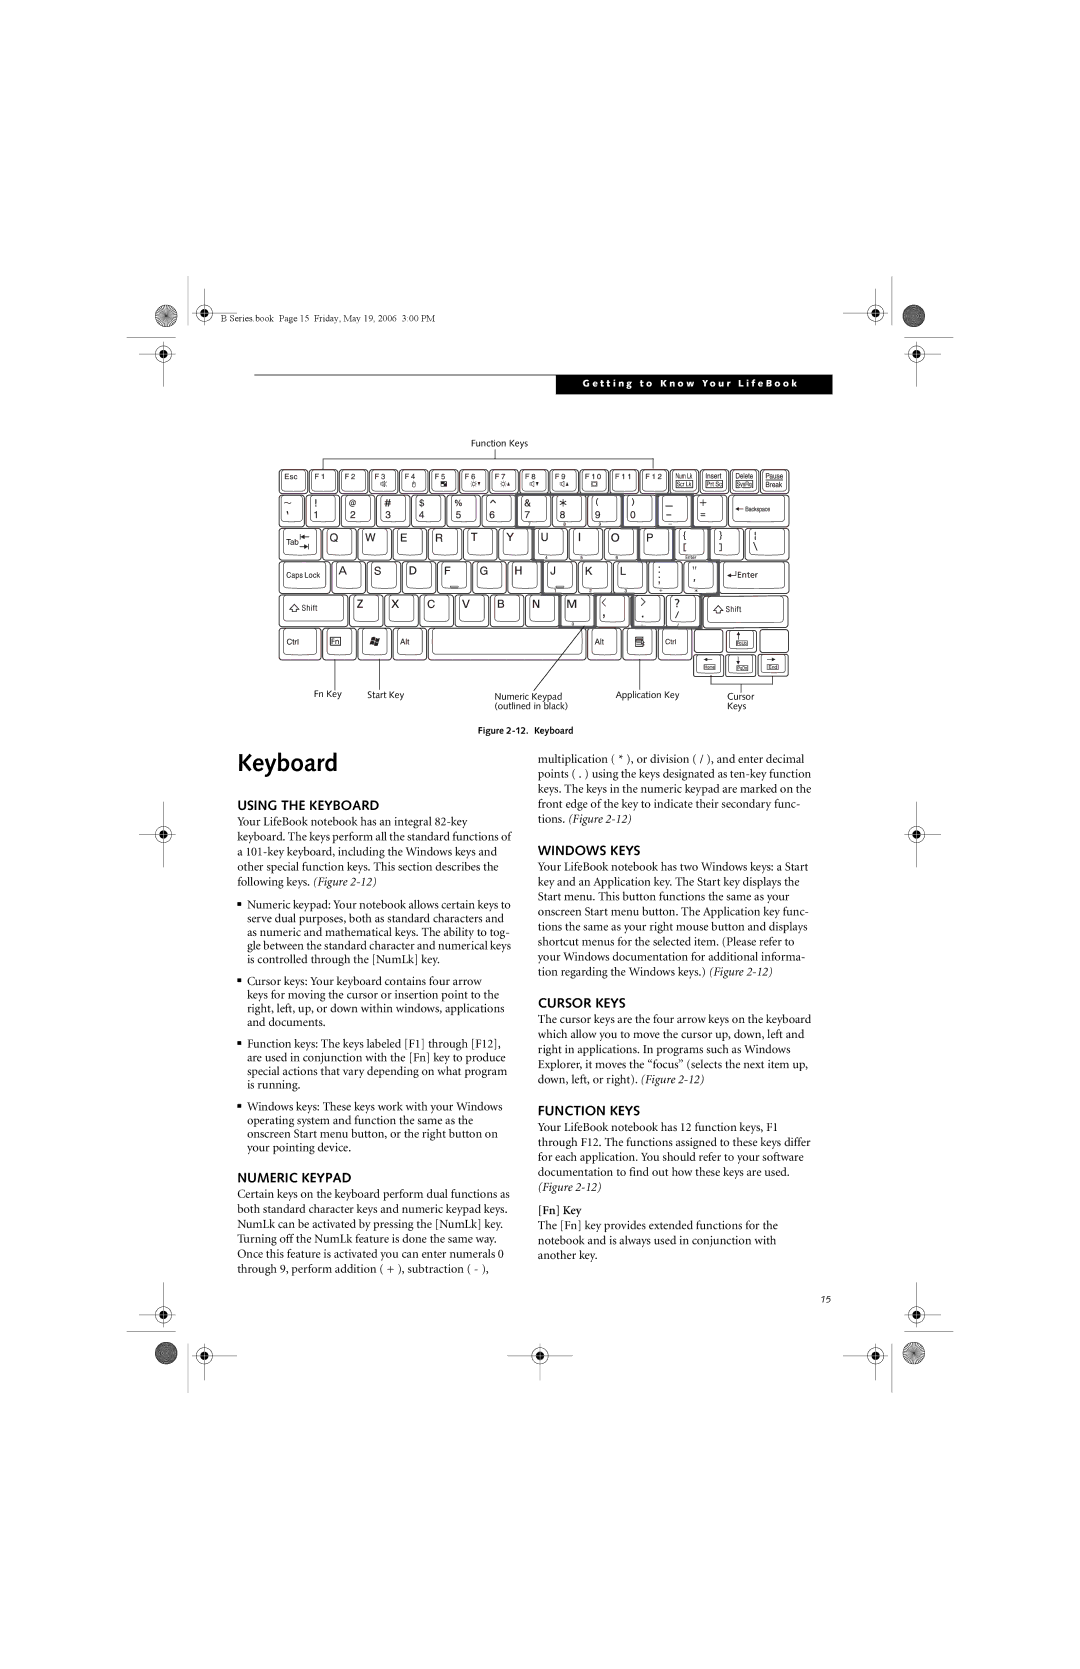 Fujitsu Siemens Computers B6210 manual Keyboard 